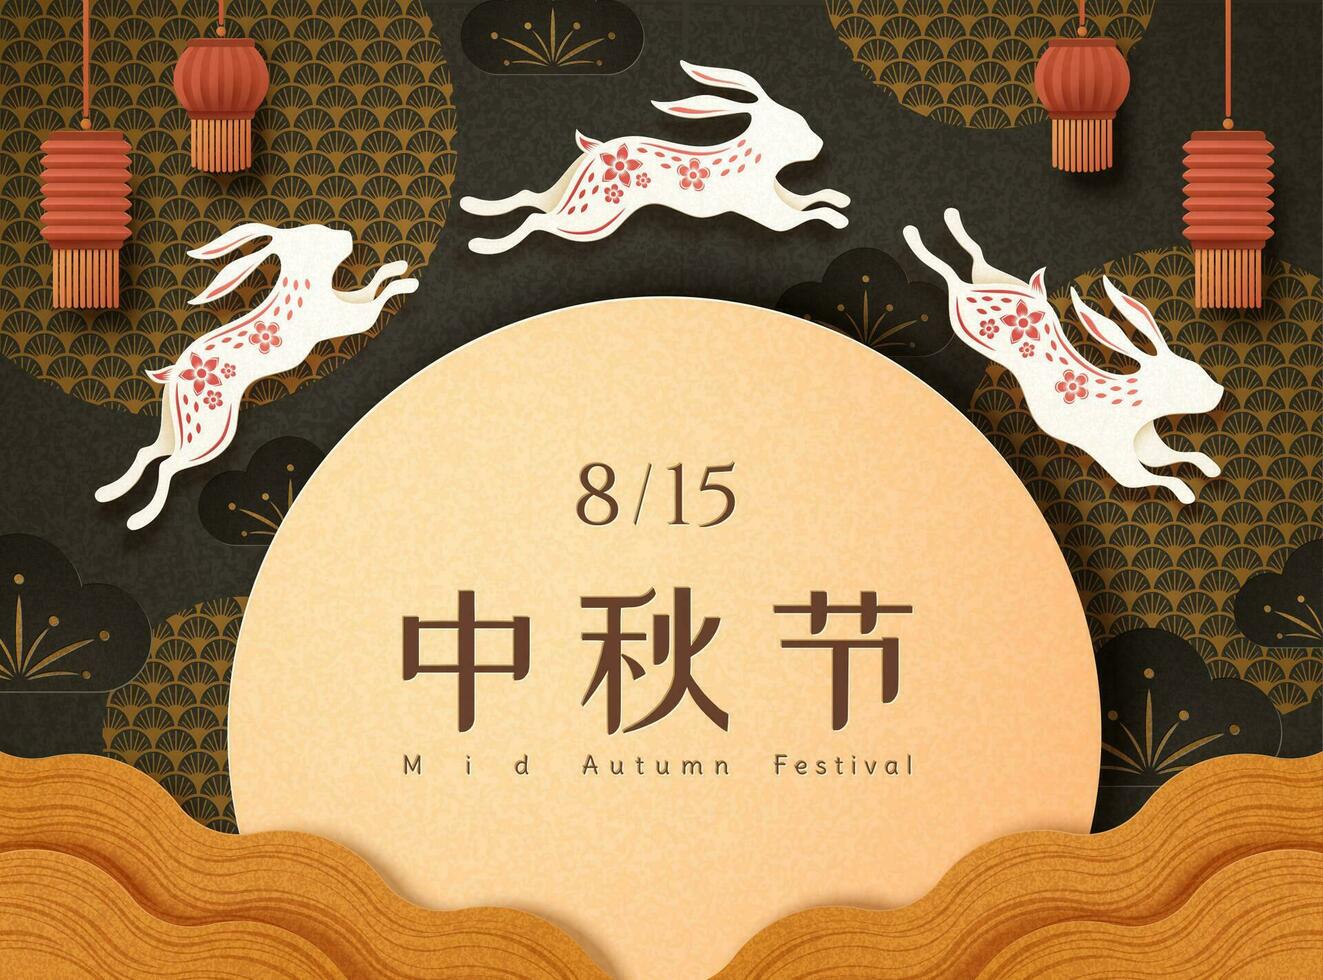 elegant mitten höst festival skriven i kinesisk ord, papper konst jade kanin och de full måne element vektor